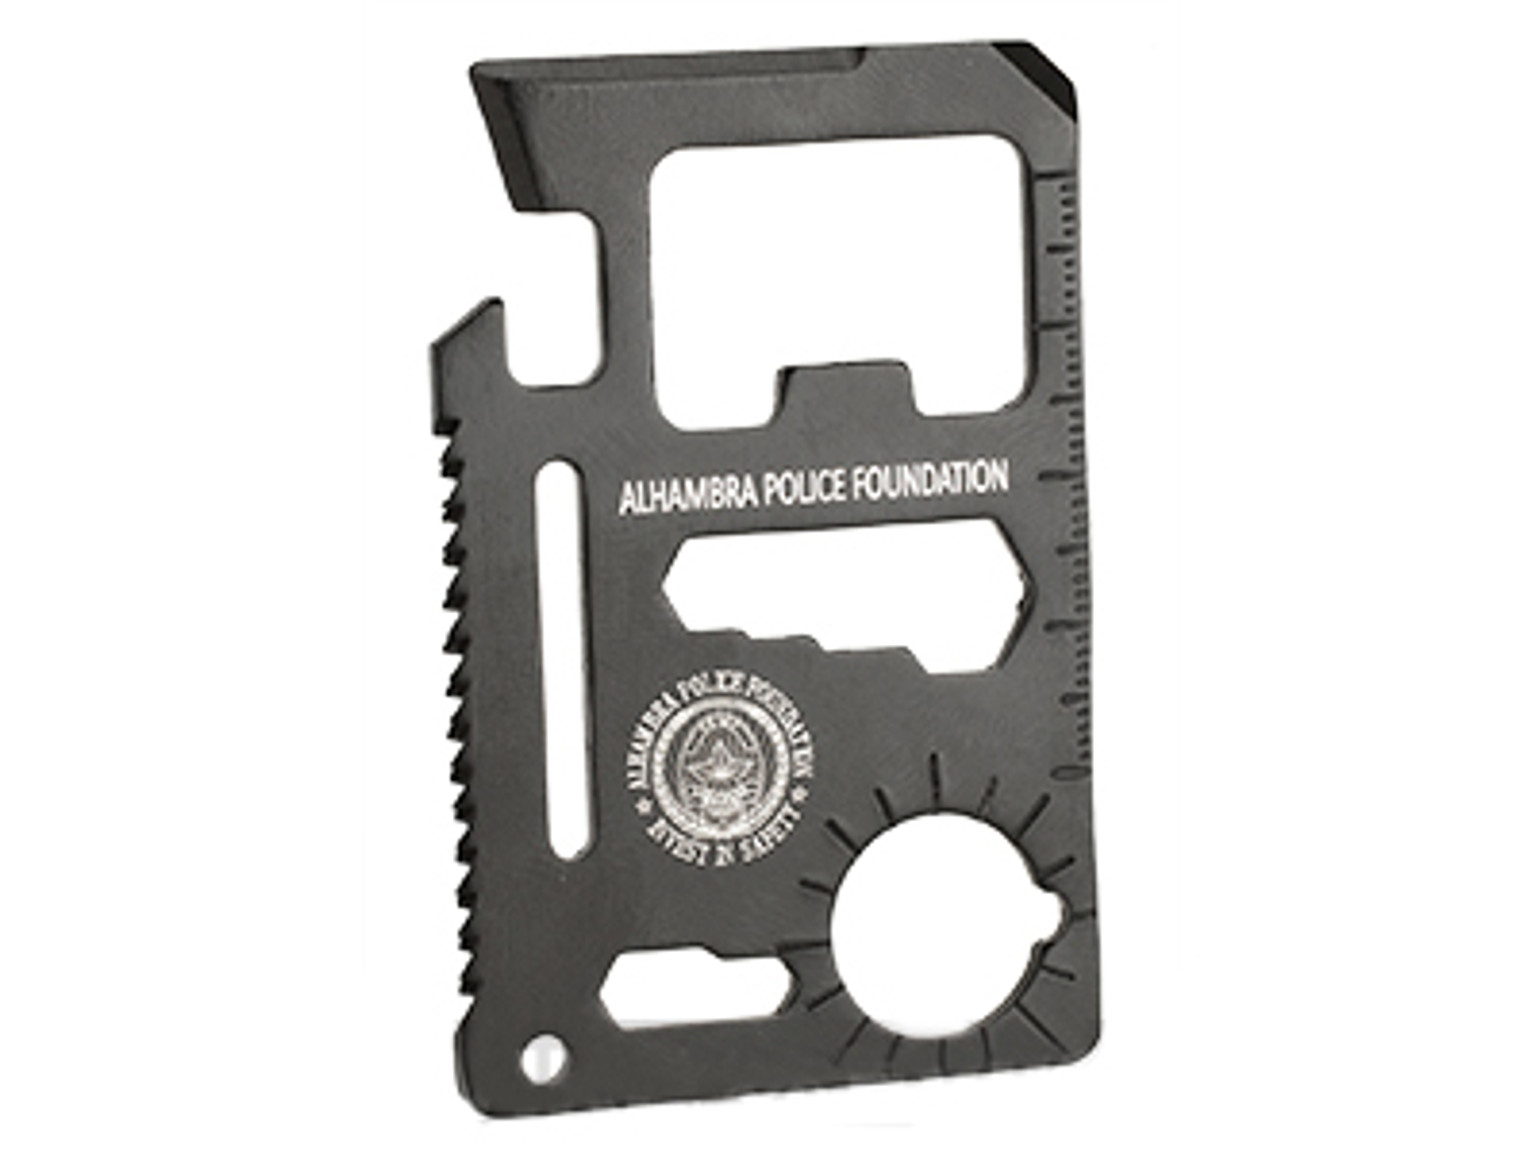 Alhambra Police Foundation Steel Black CNC Credit Card Sized Multi-Tool